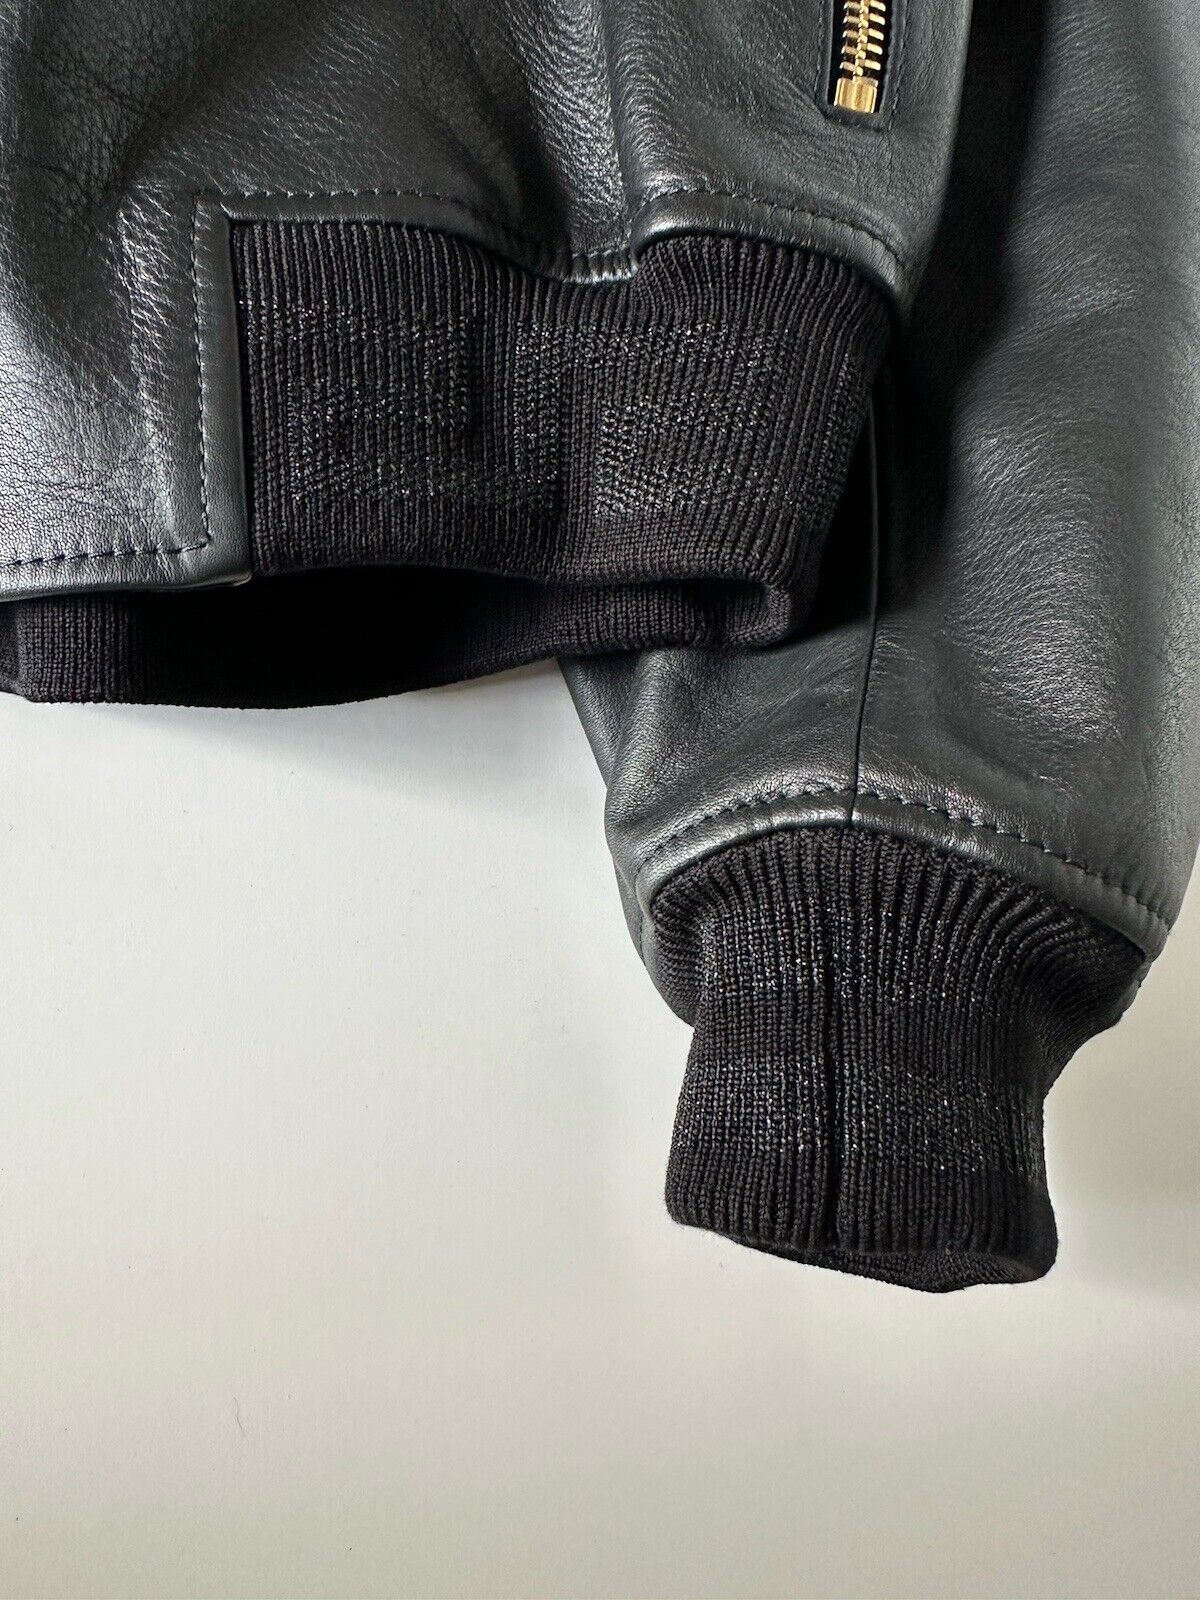 Versace Men's Calf Leather Heavy Jacket Black 42 US (52 Eu) IT NWT $3625 1007634